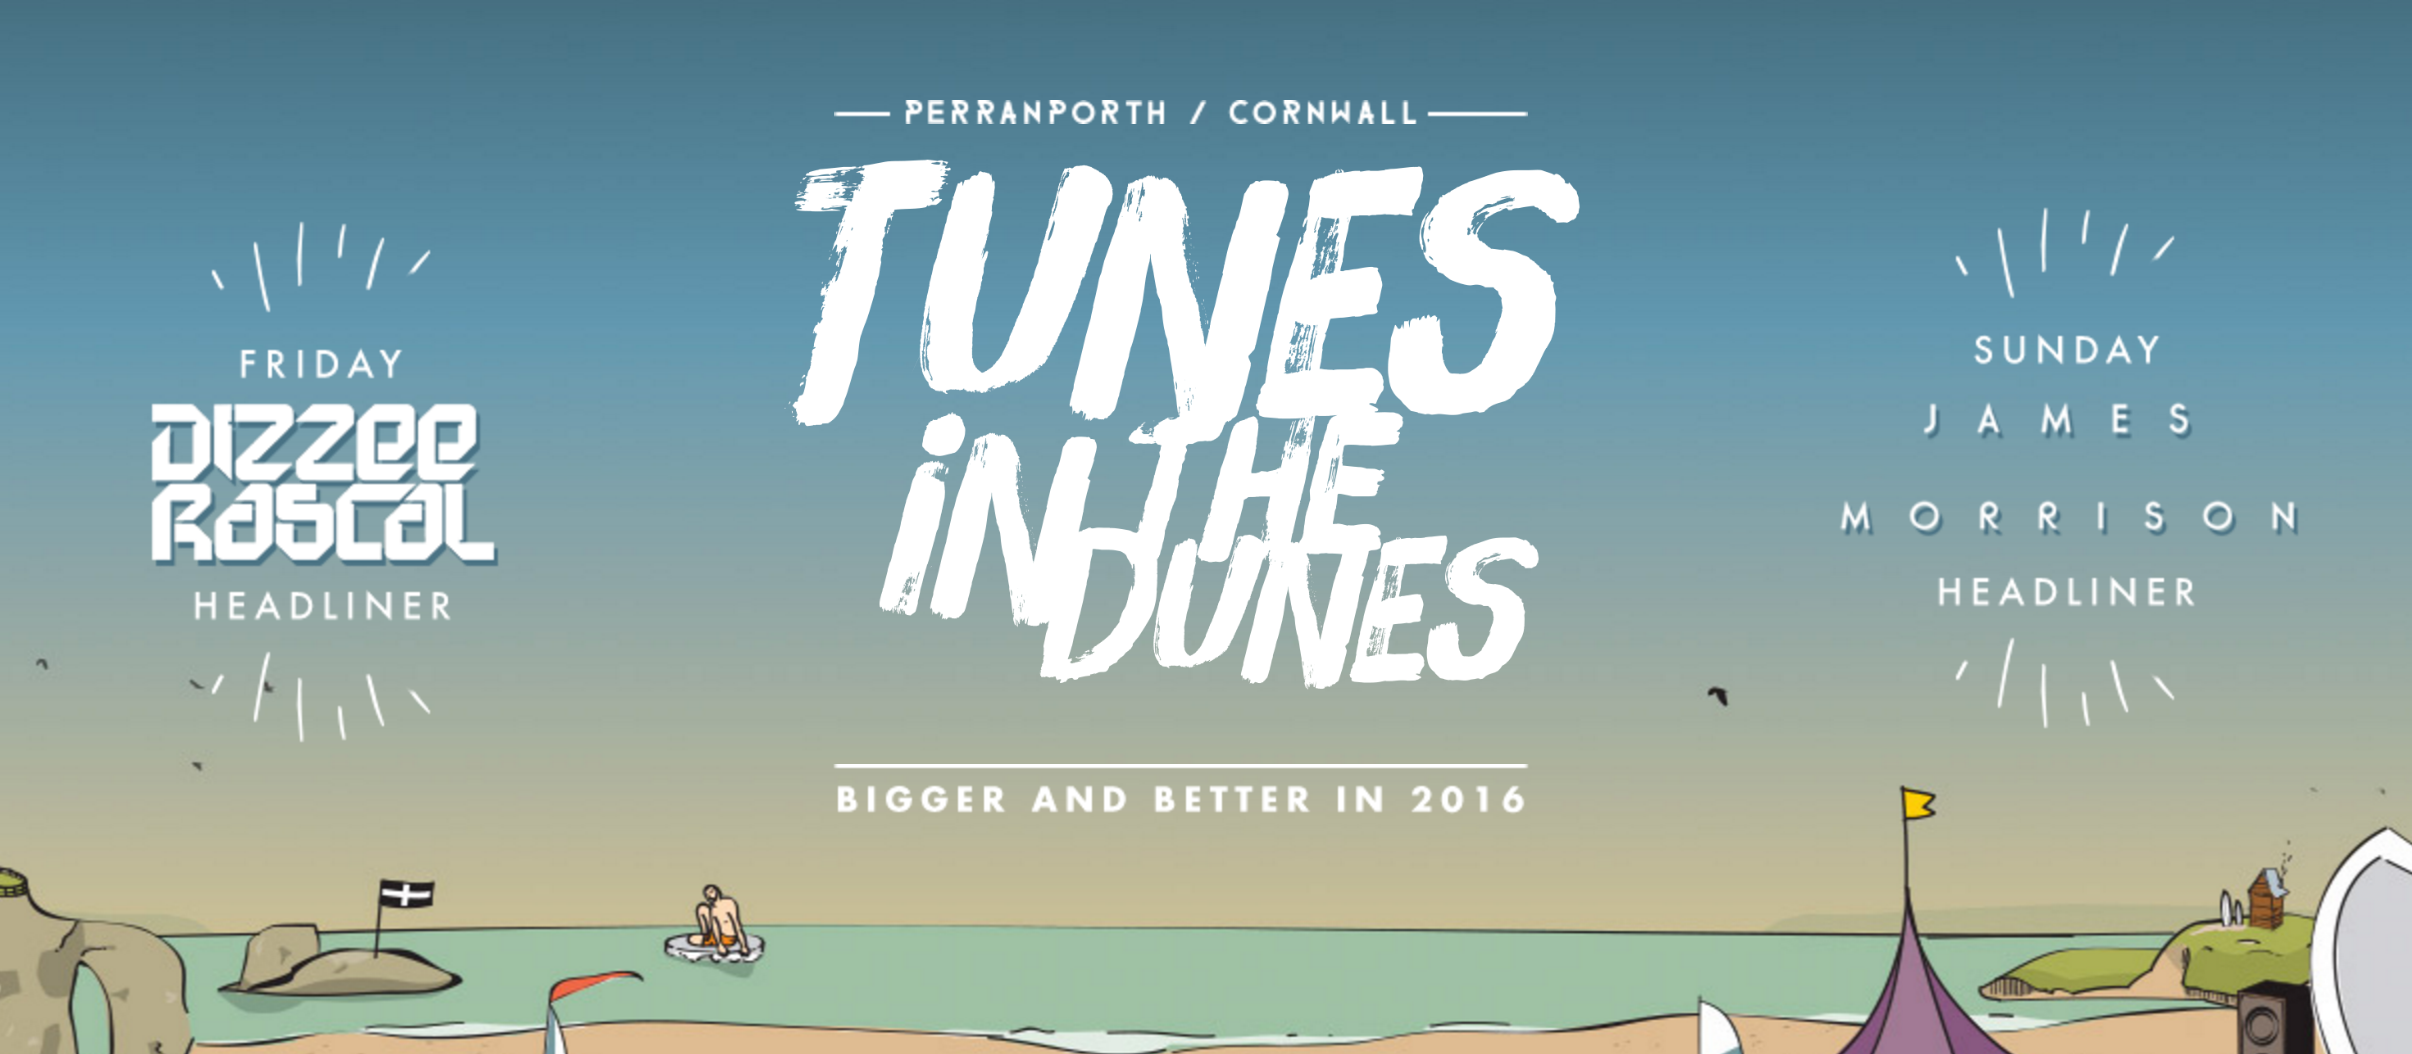 Tunes in the Dunes